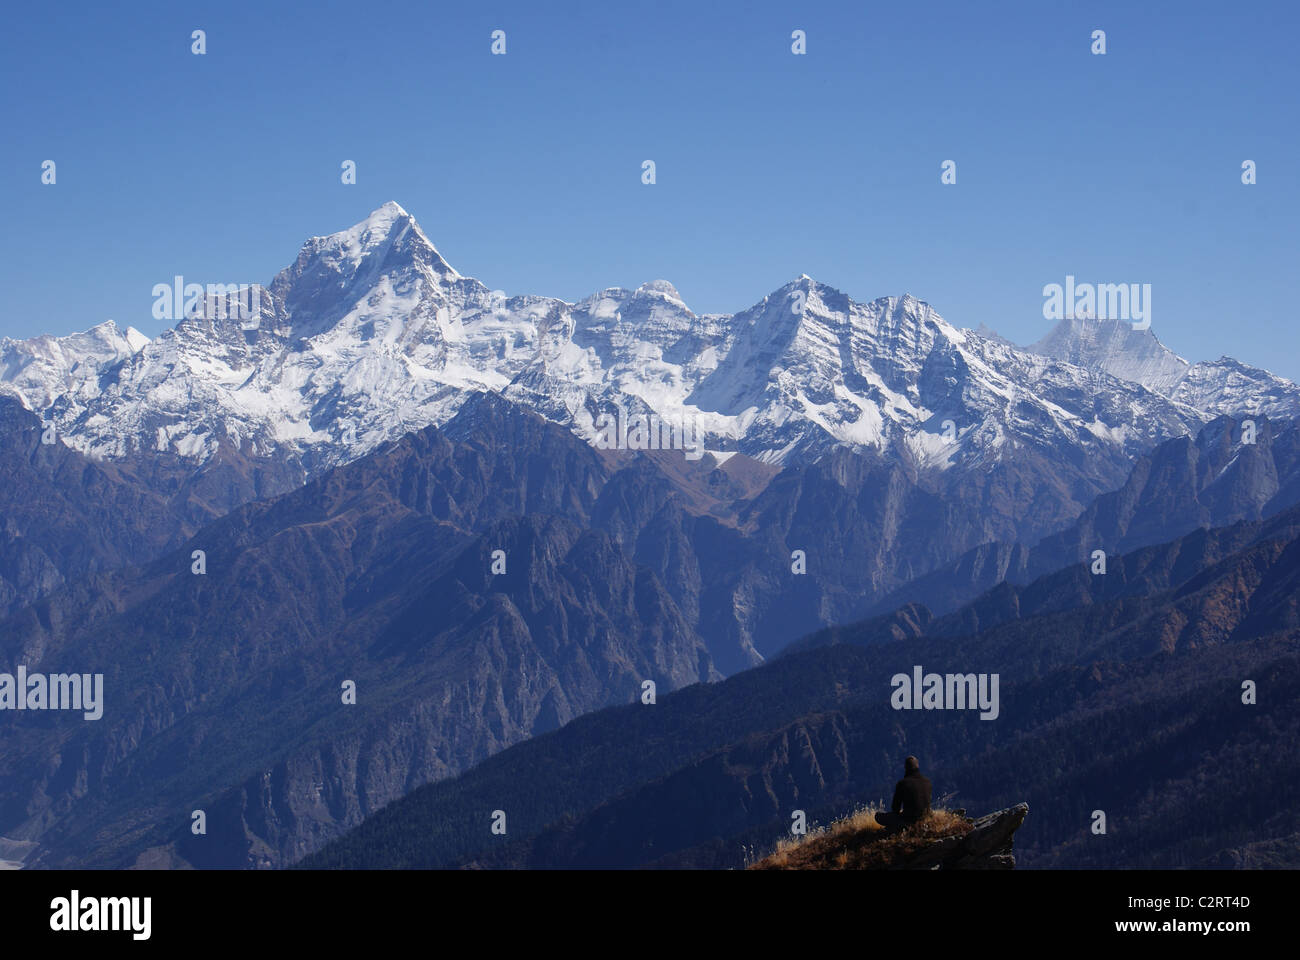 Garhwal Himalayas, India: A trekker takes in views of Dunagiri and Nanda Kot from beneath the Kuari Pass. Stock Photo